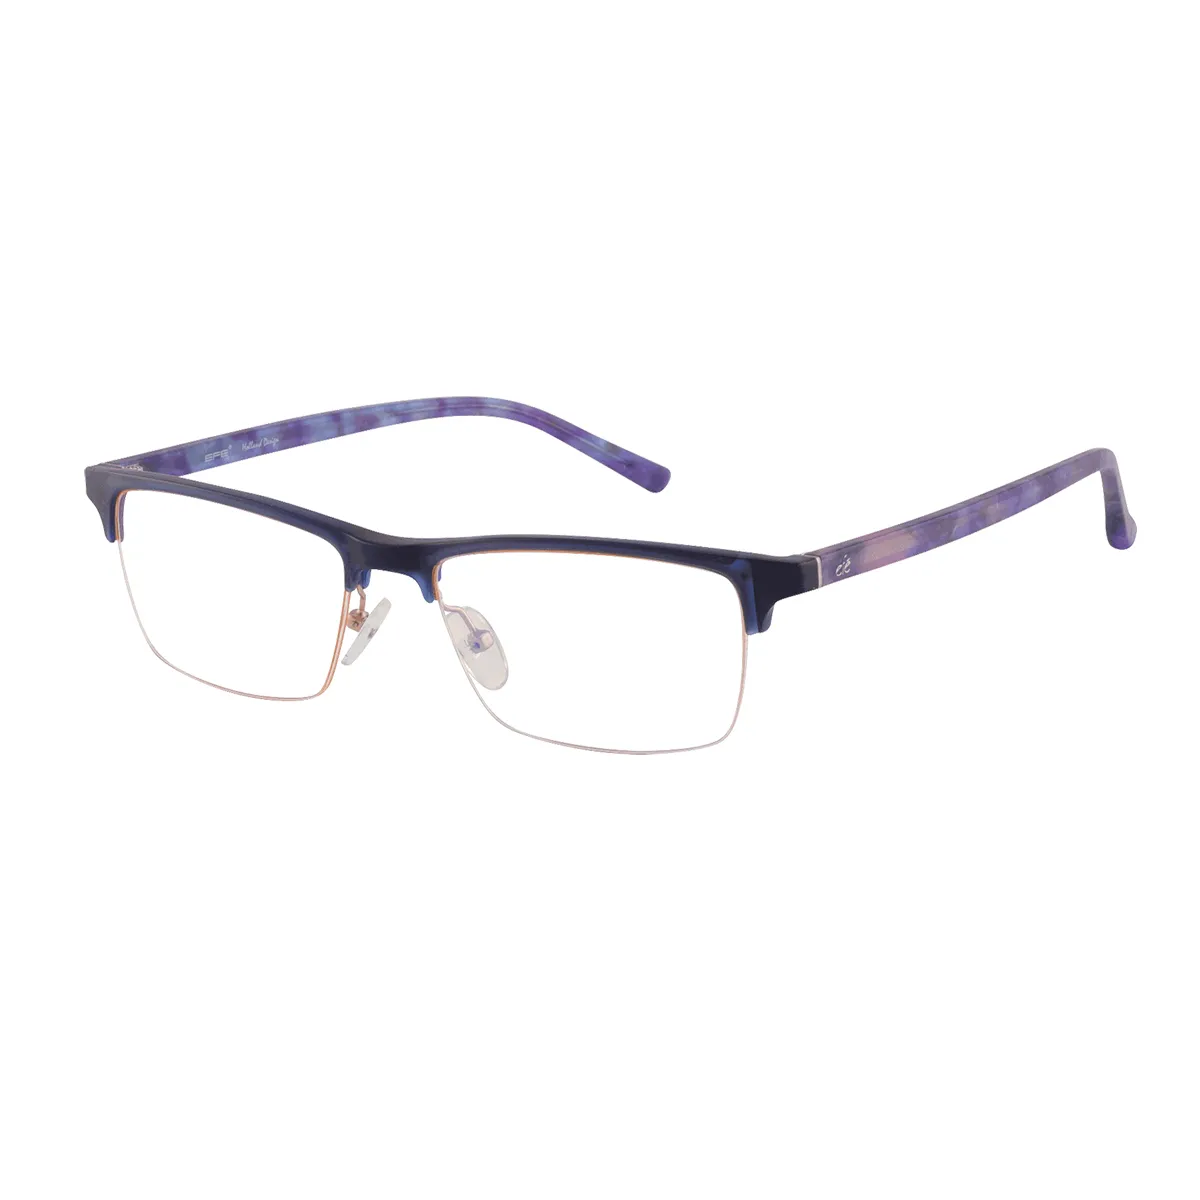 Gerald - Browline Blue Glasses for Men